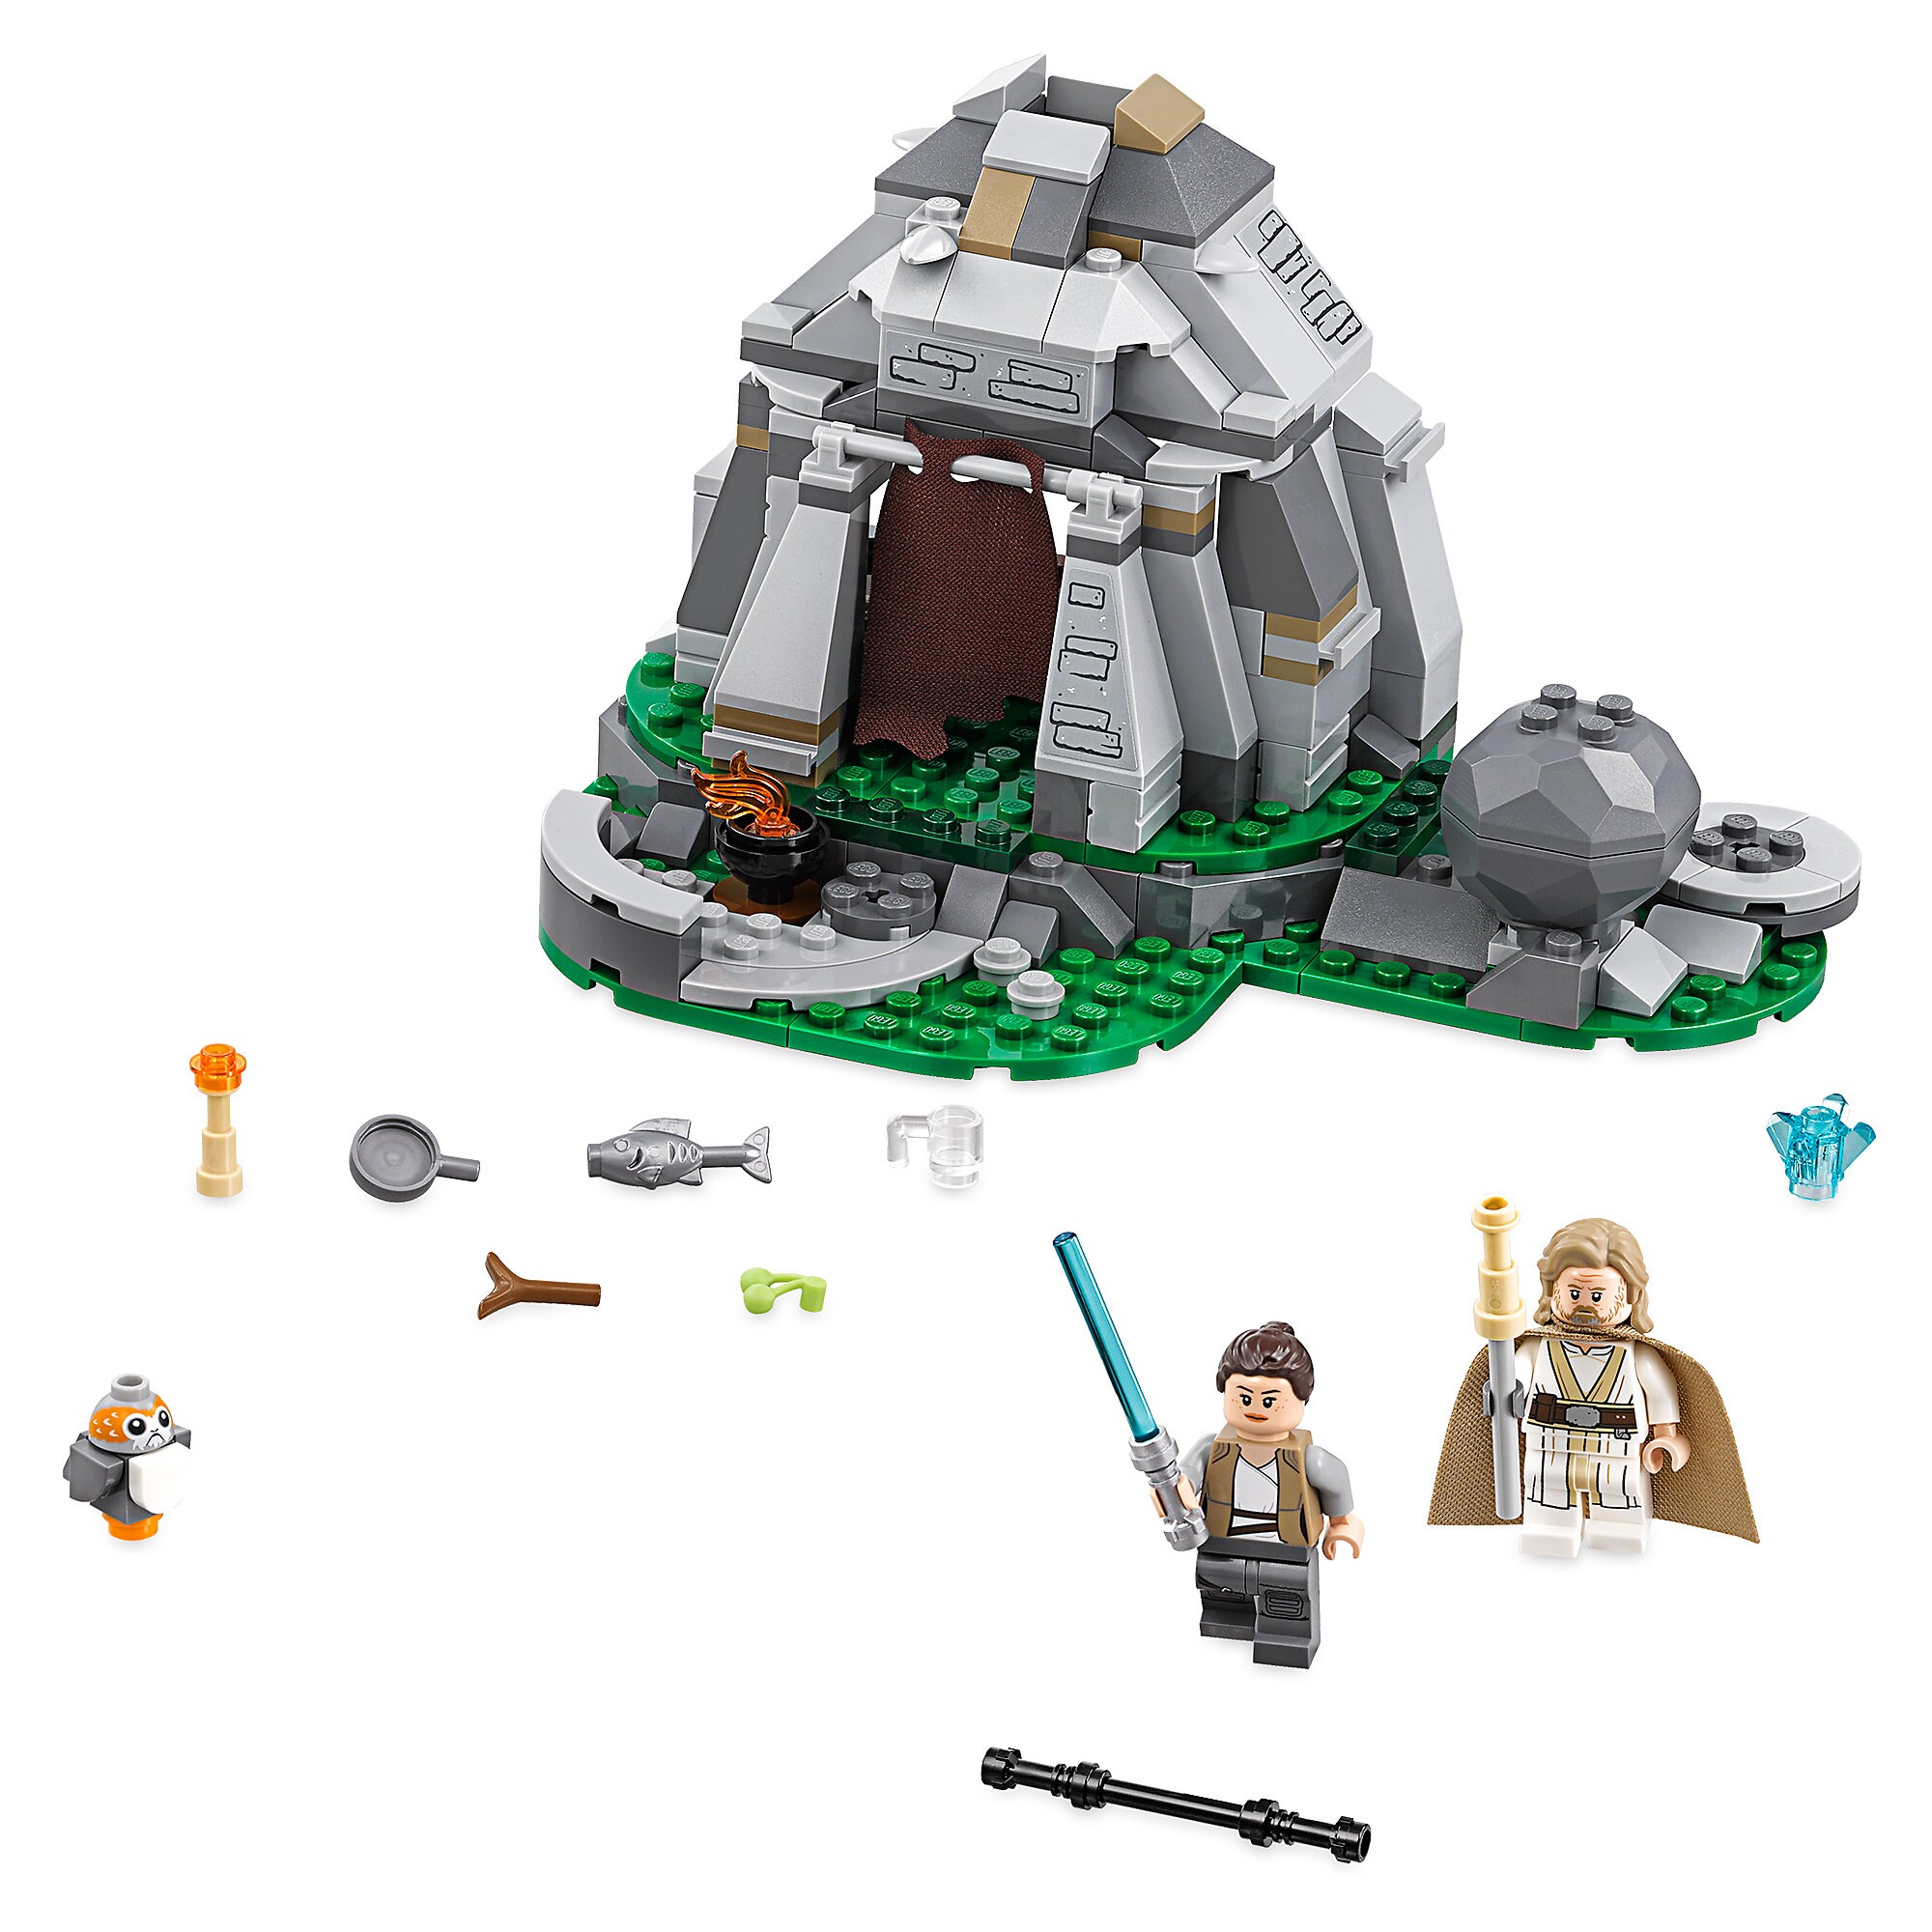 Ahch-To Island Training Playset by LEGO - Star Wars: The Last Jedi